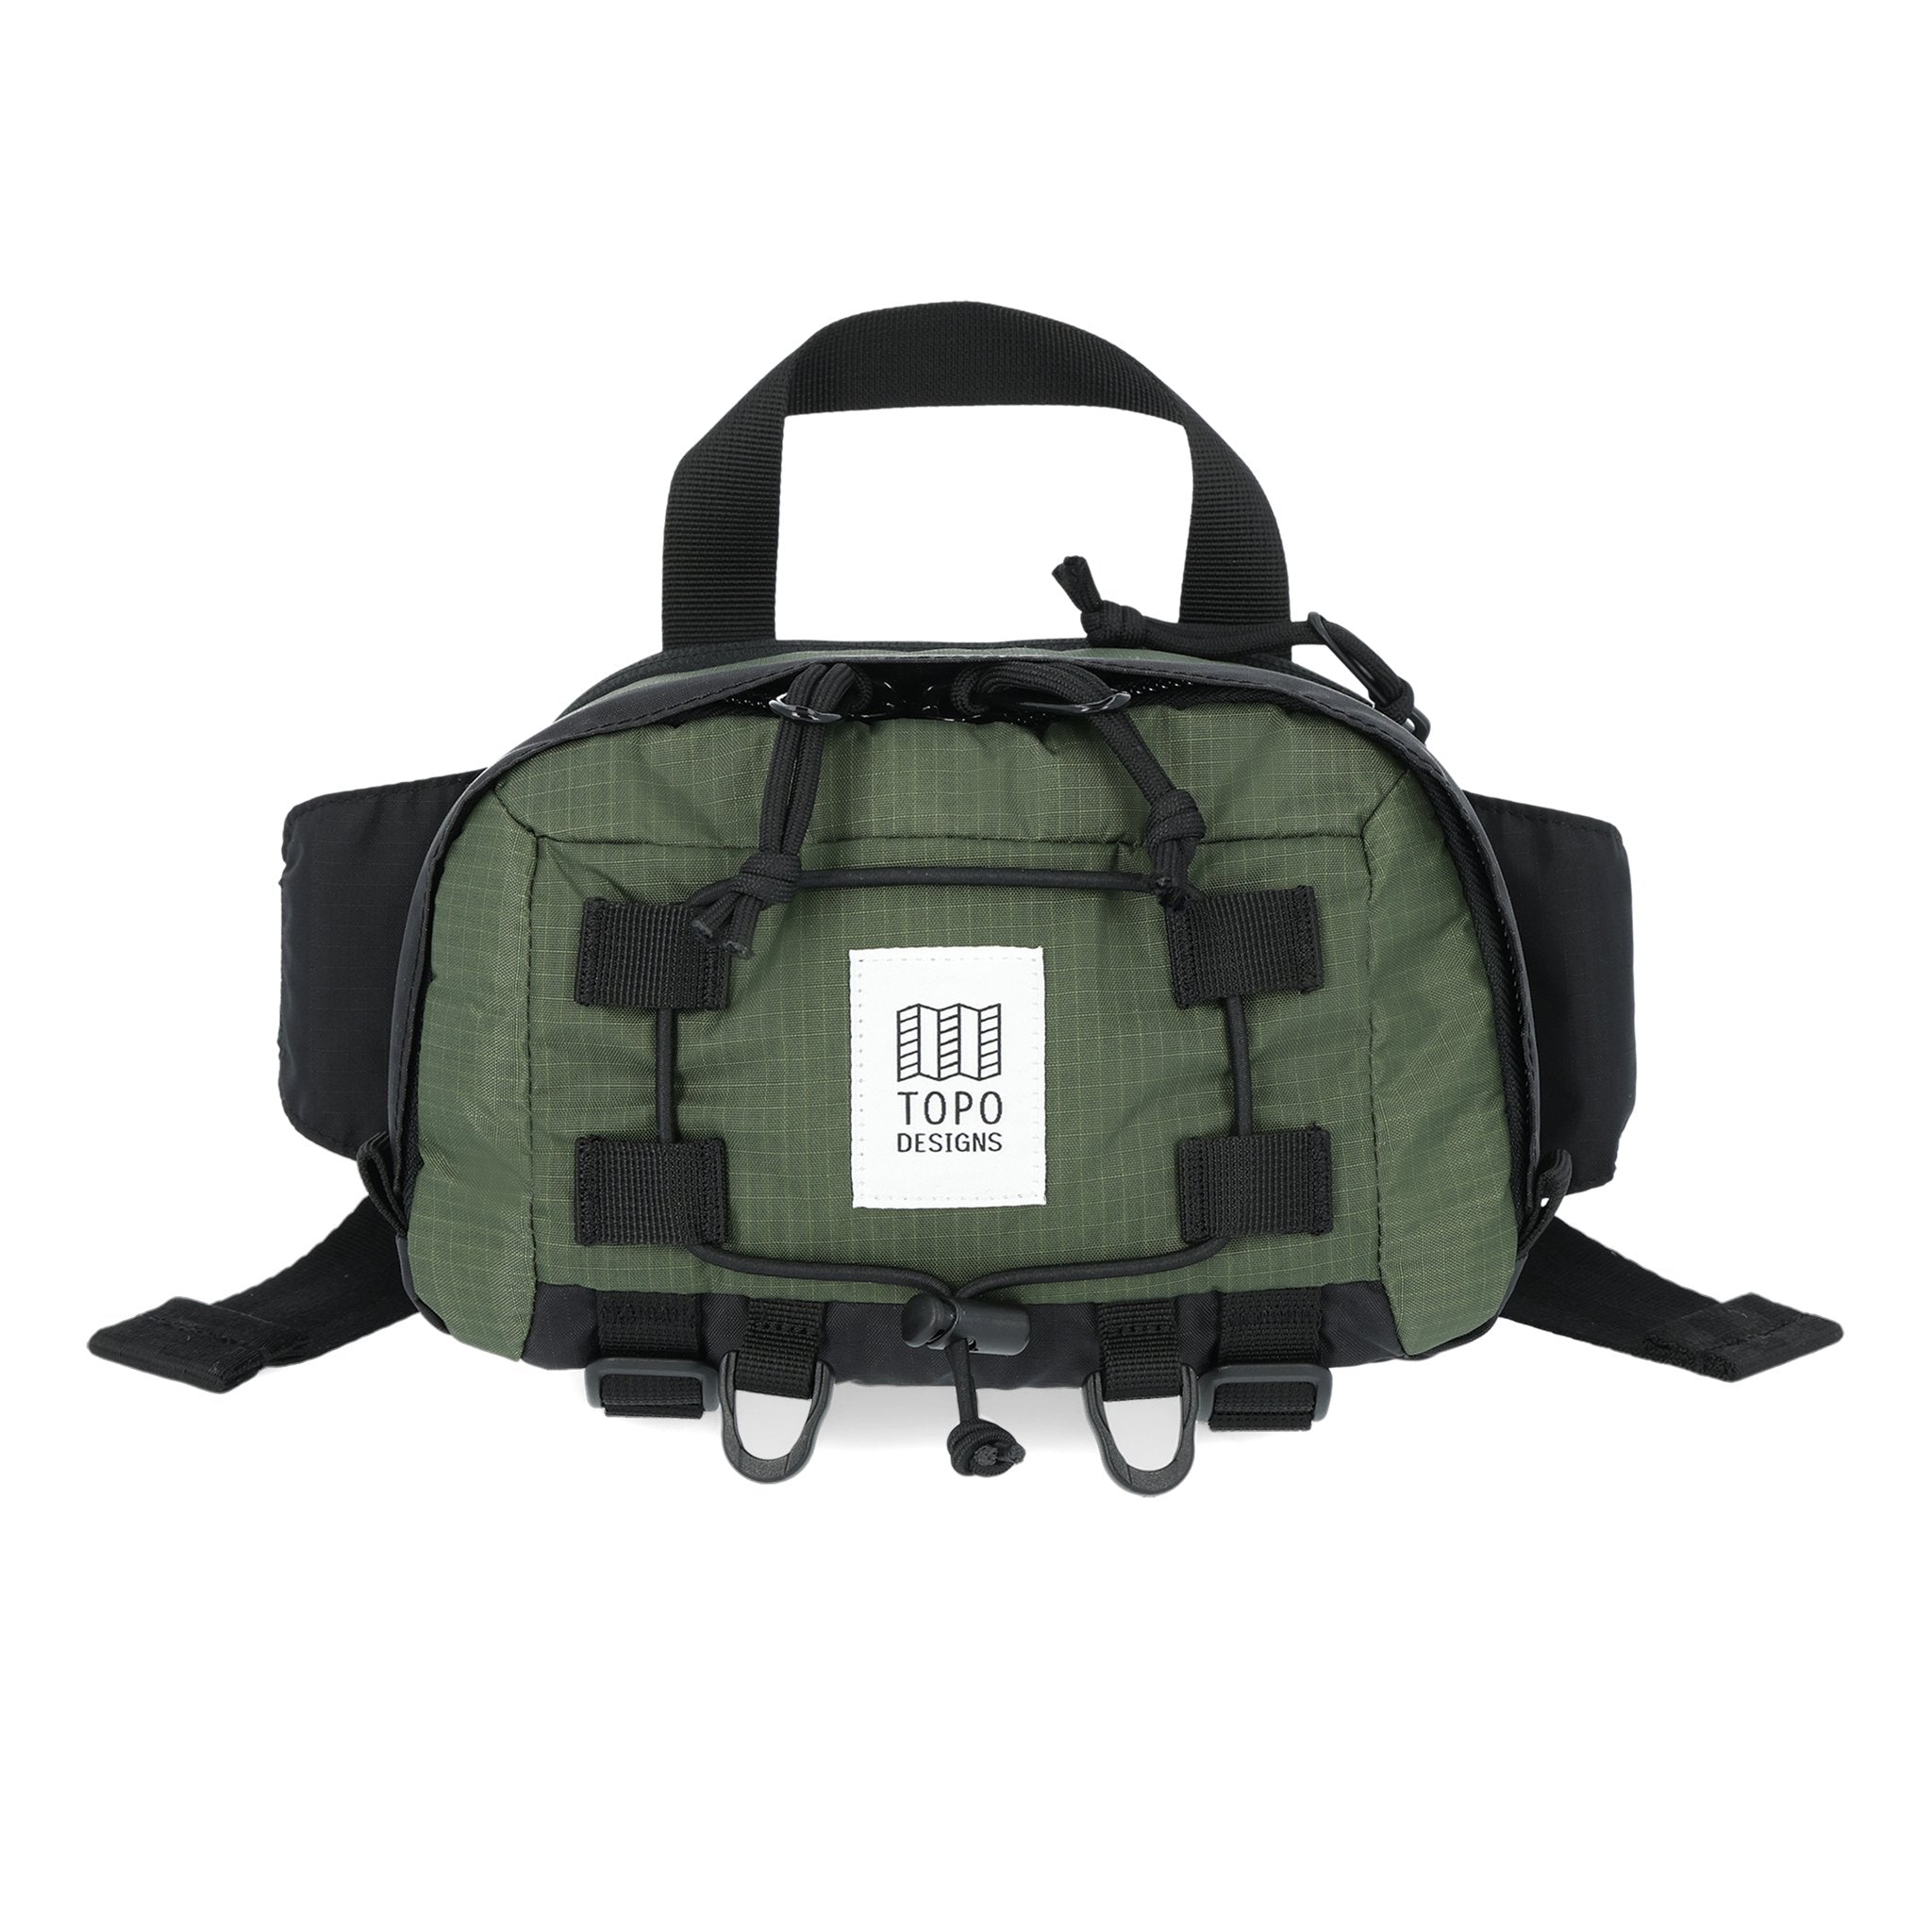 Topo Designs Mountain Hip Pack lumbar bum bag in Olive green.